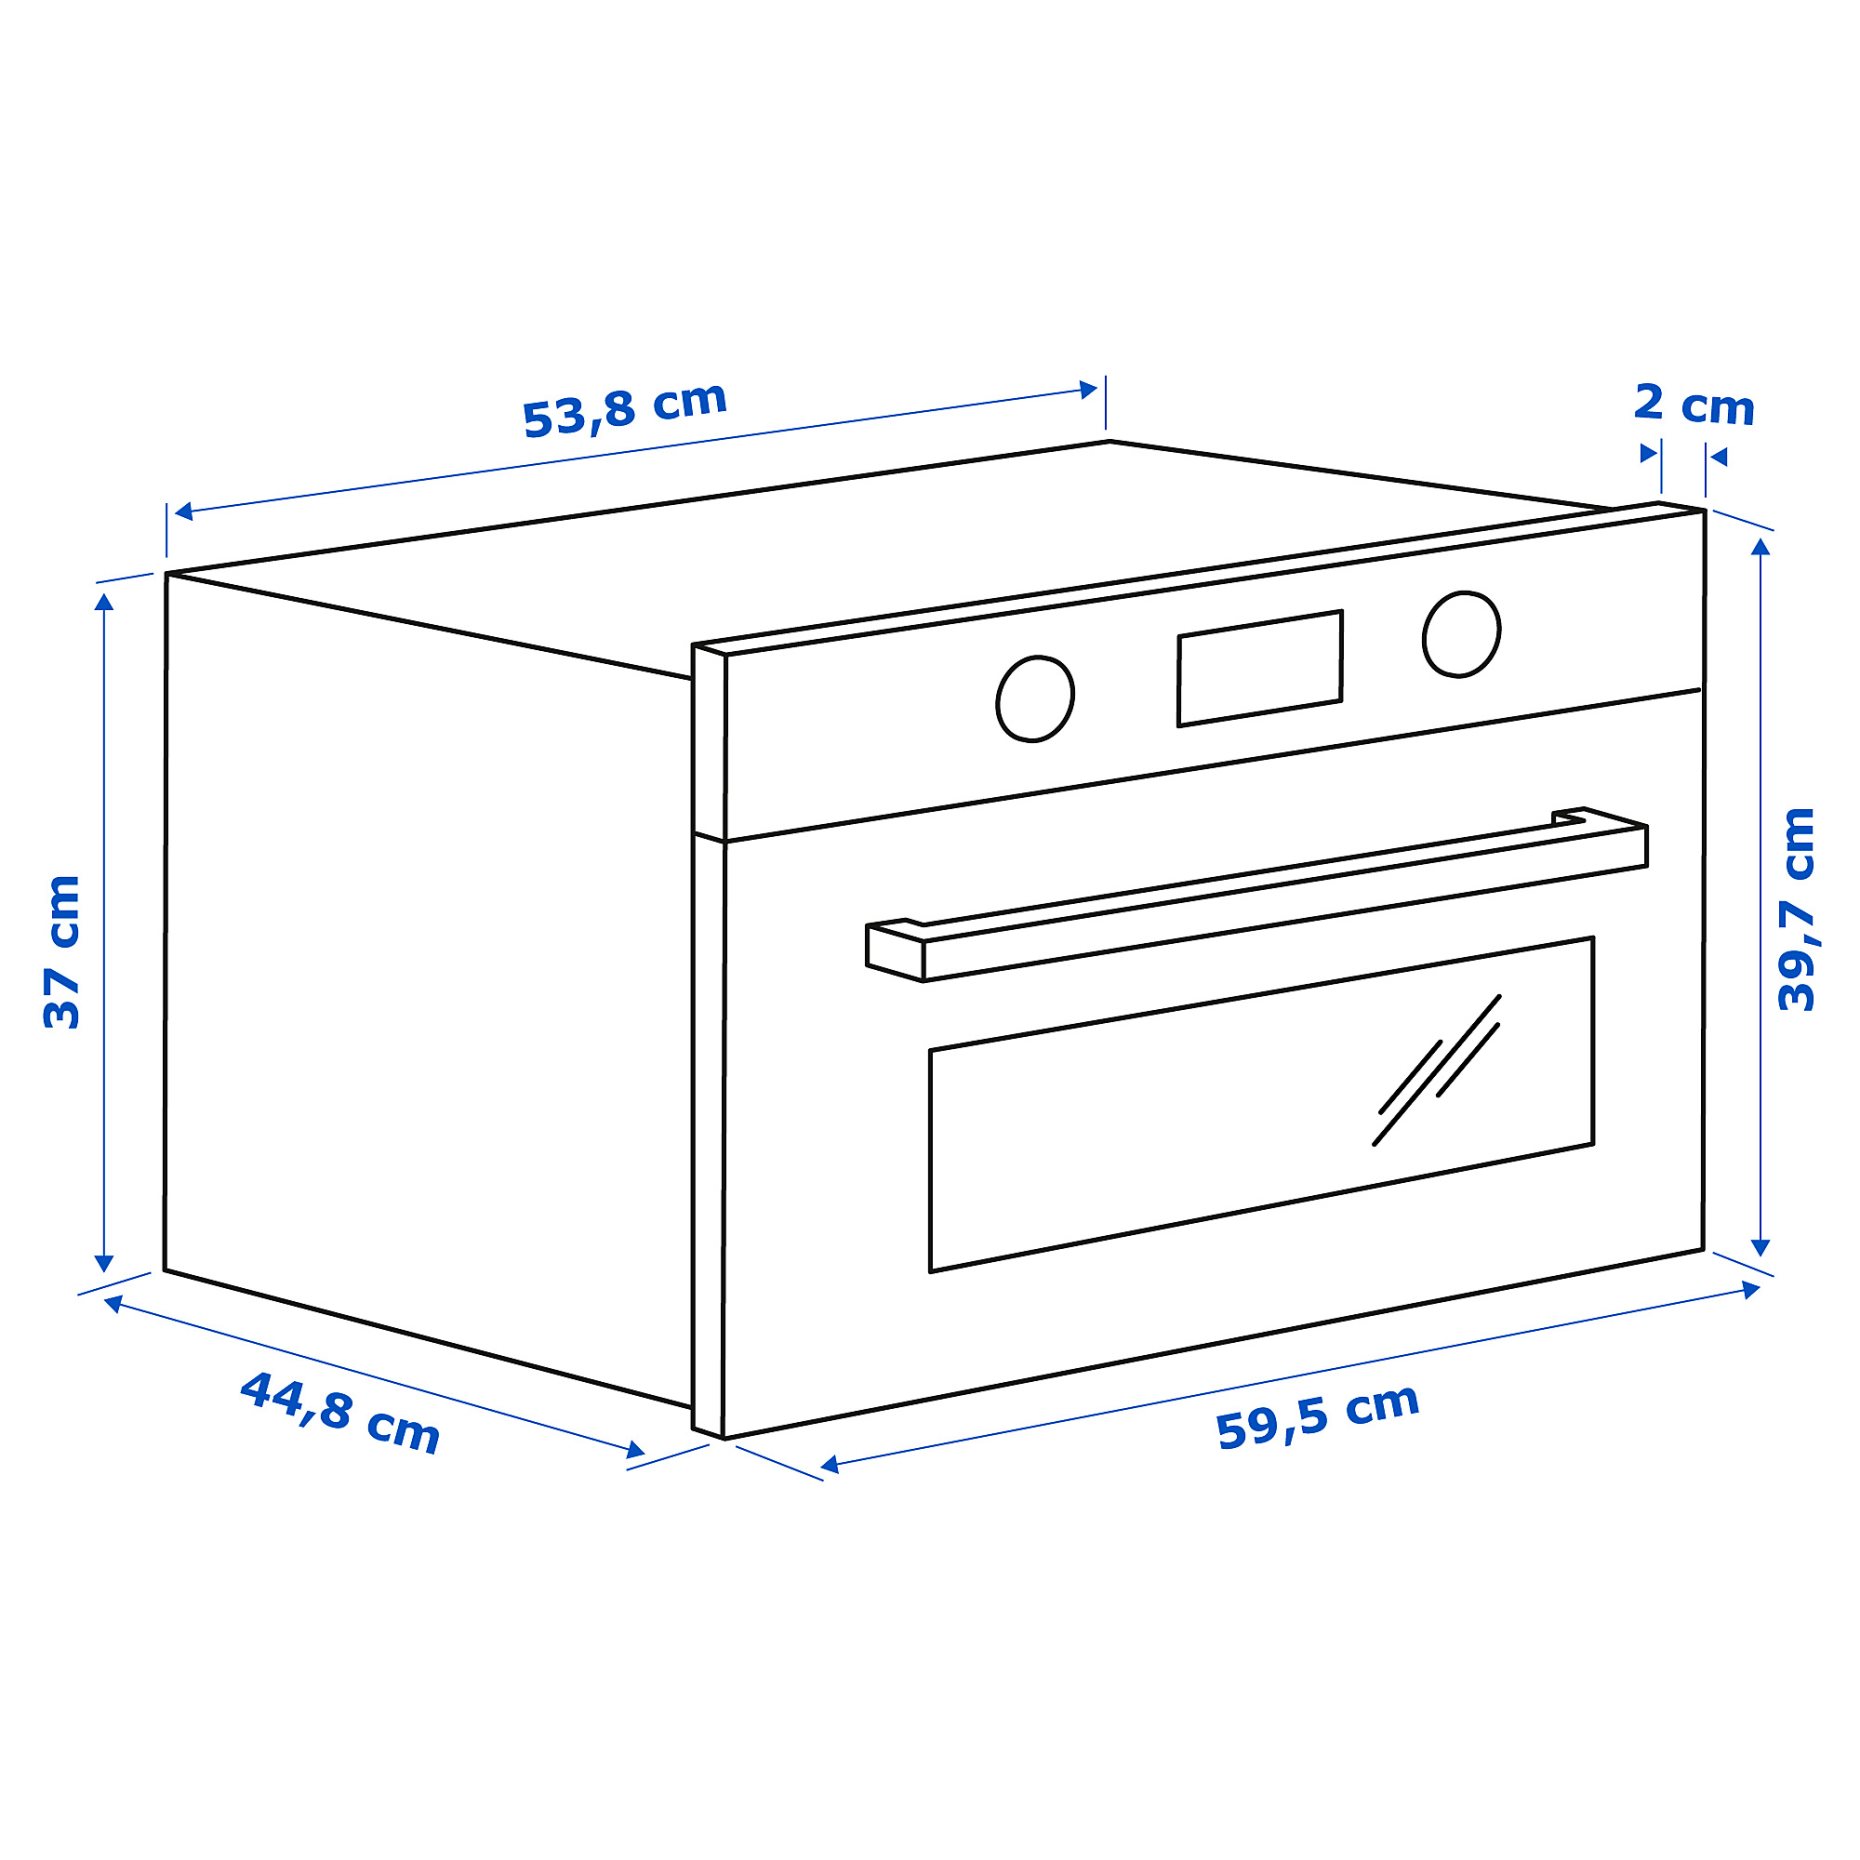 BEJUBLAD, microwave oven, 904.117.47